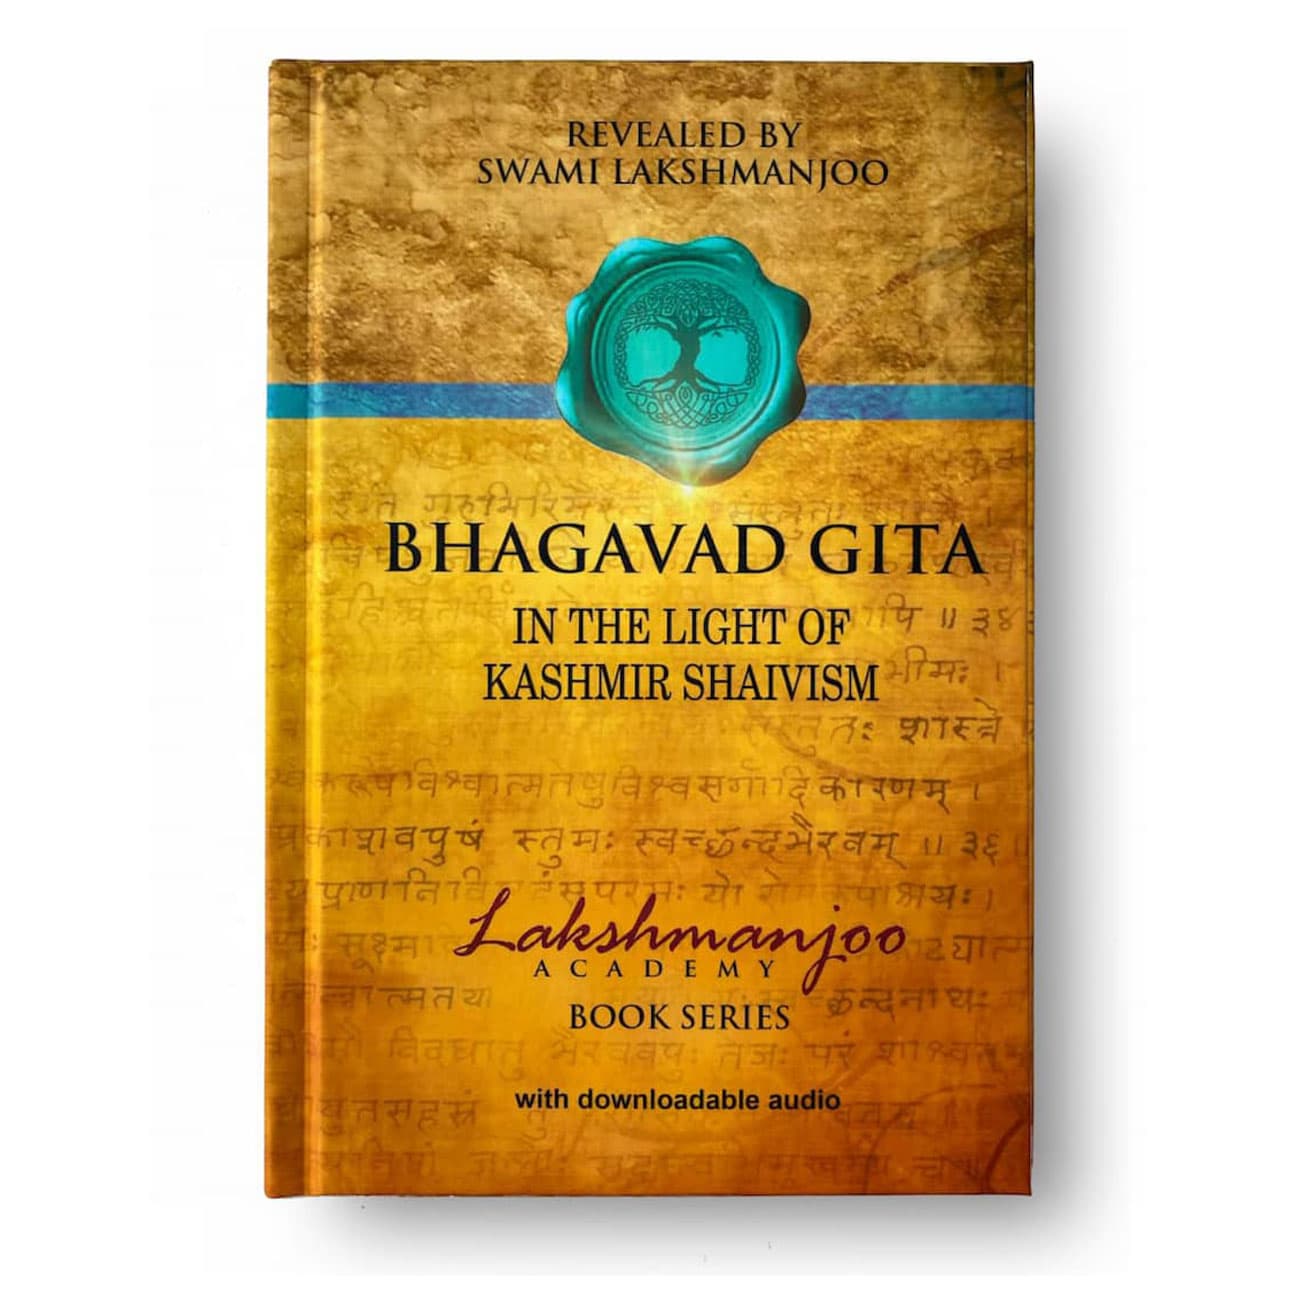 AUDIO: Bhagavad Gita: in the Light of Kashmir Shaivism